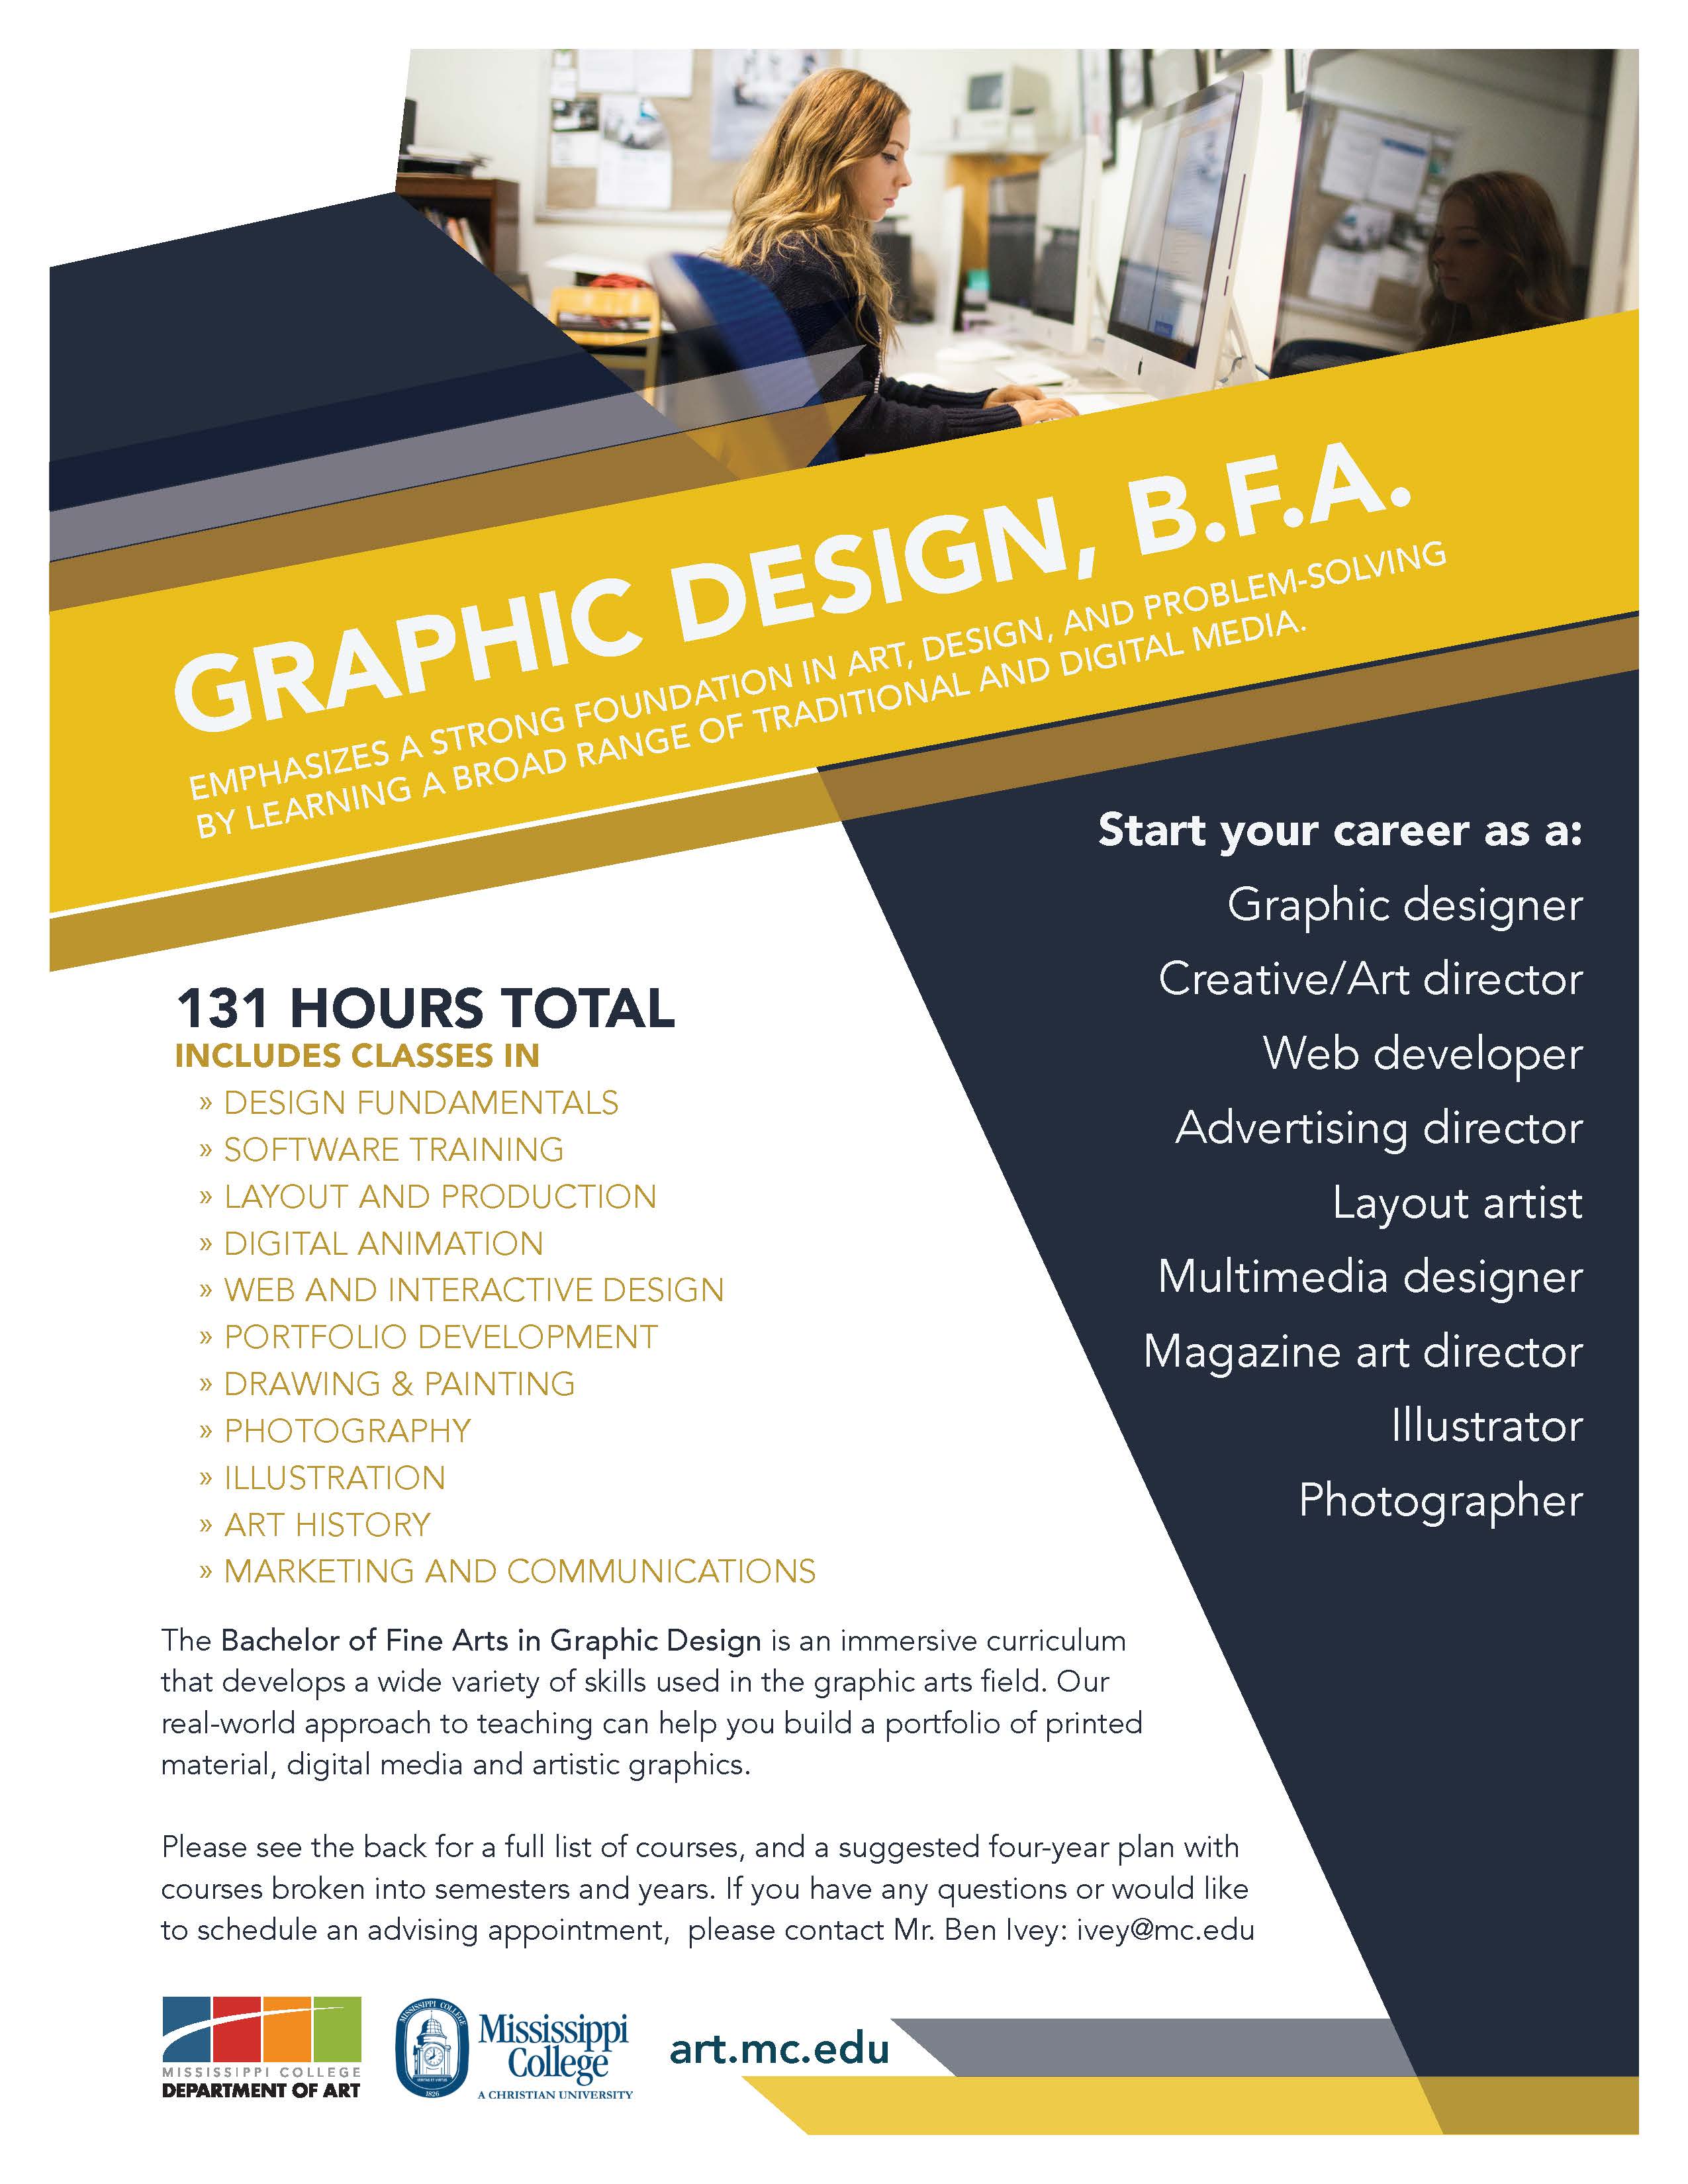 Graphic Design, B.F.A. Flyer